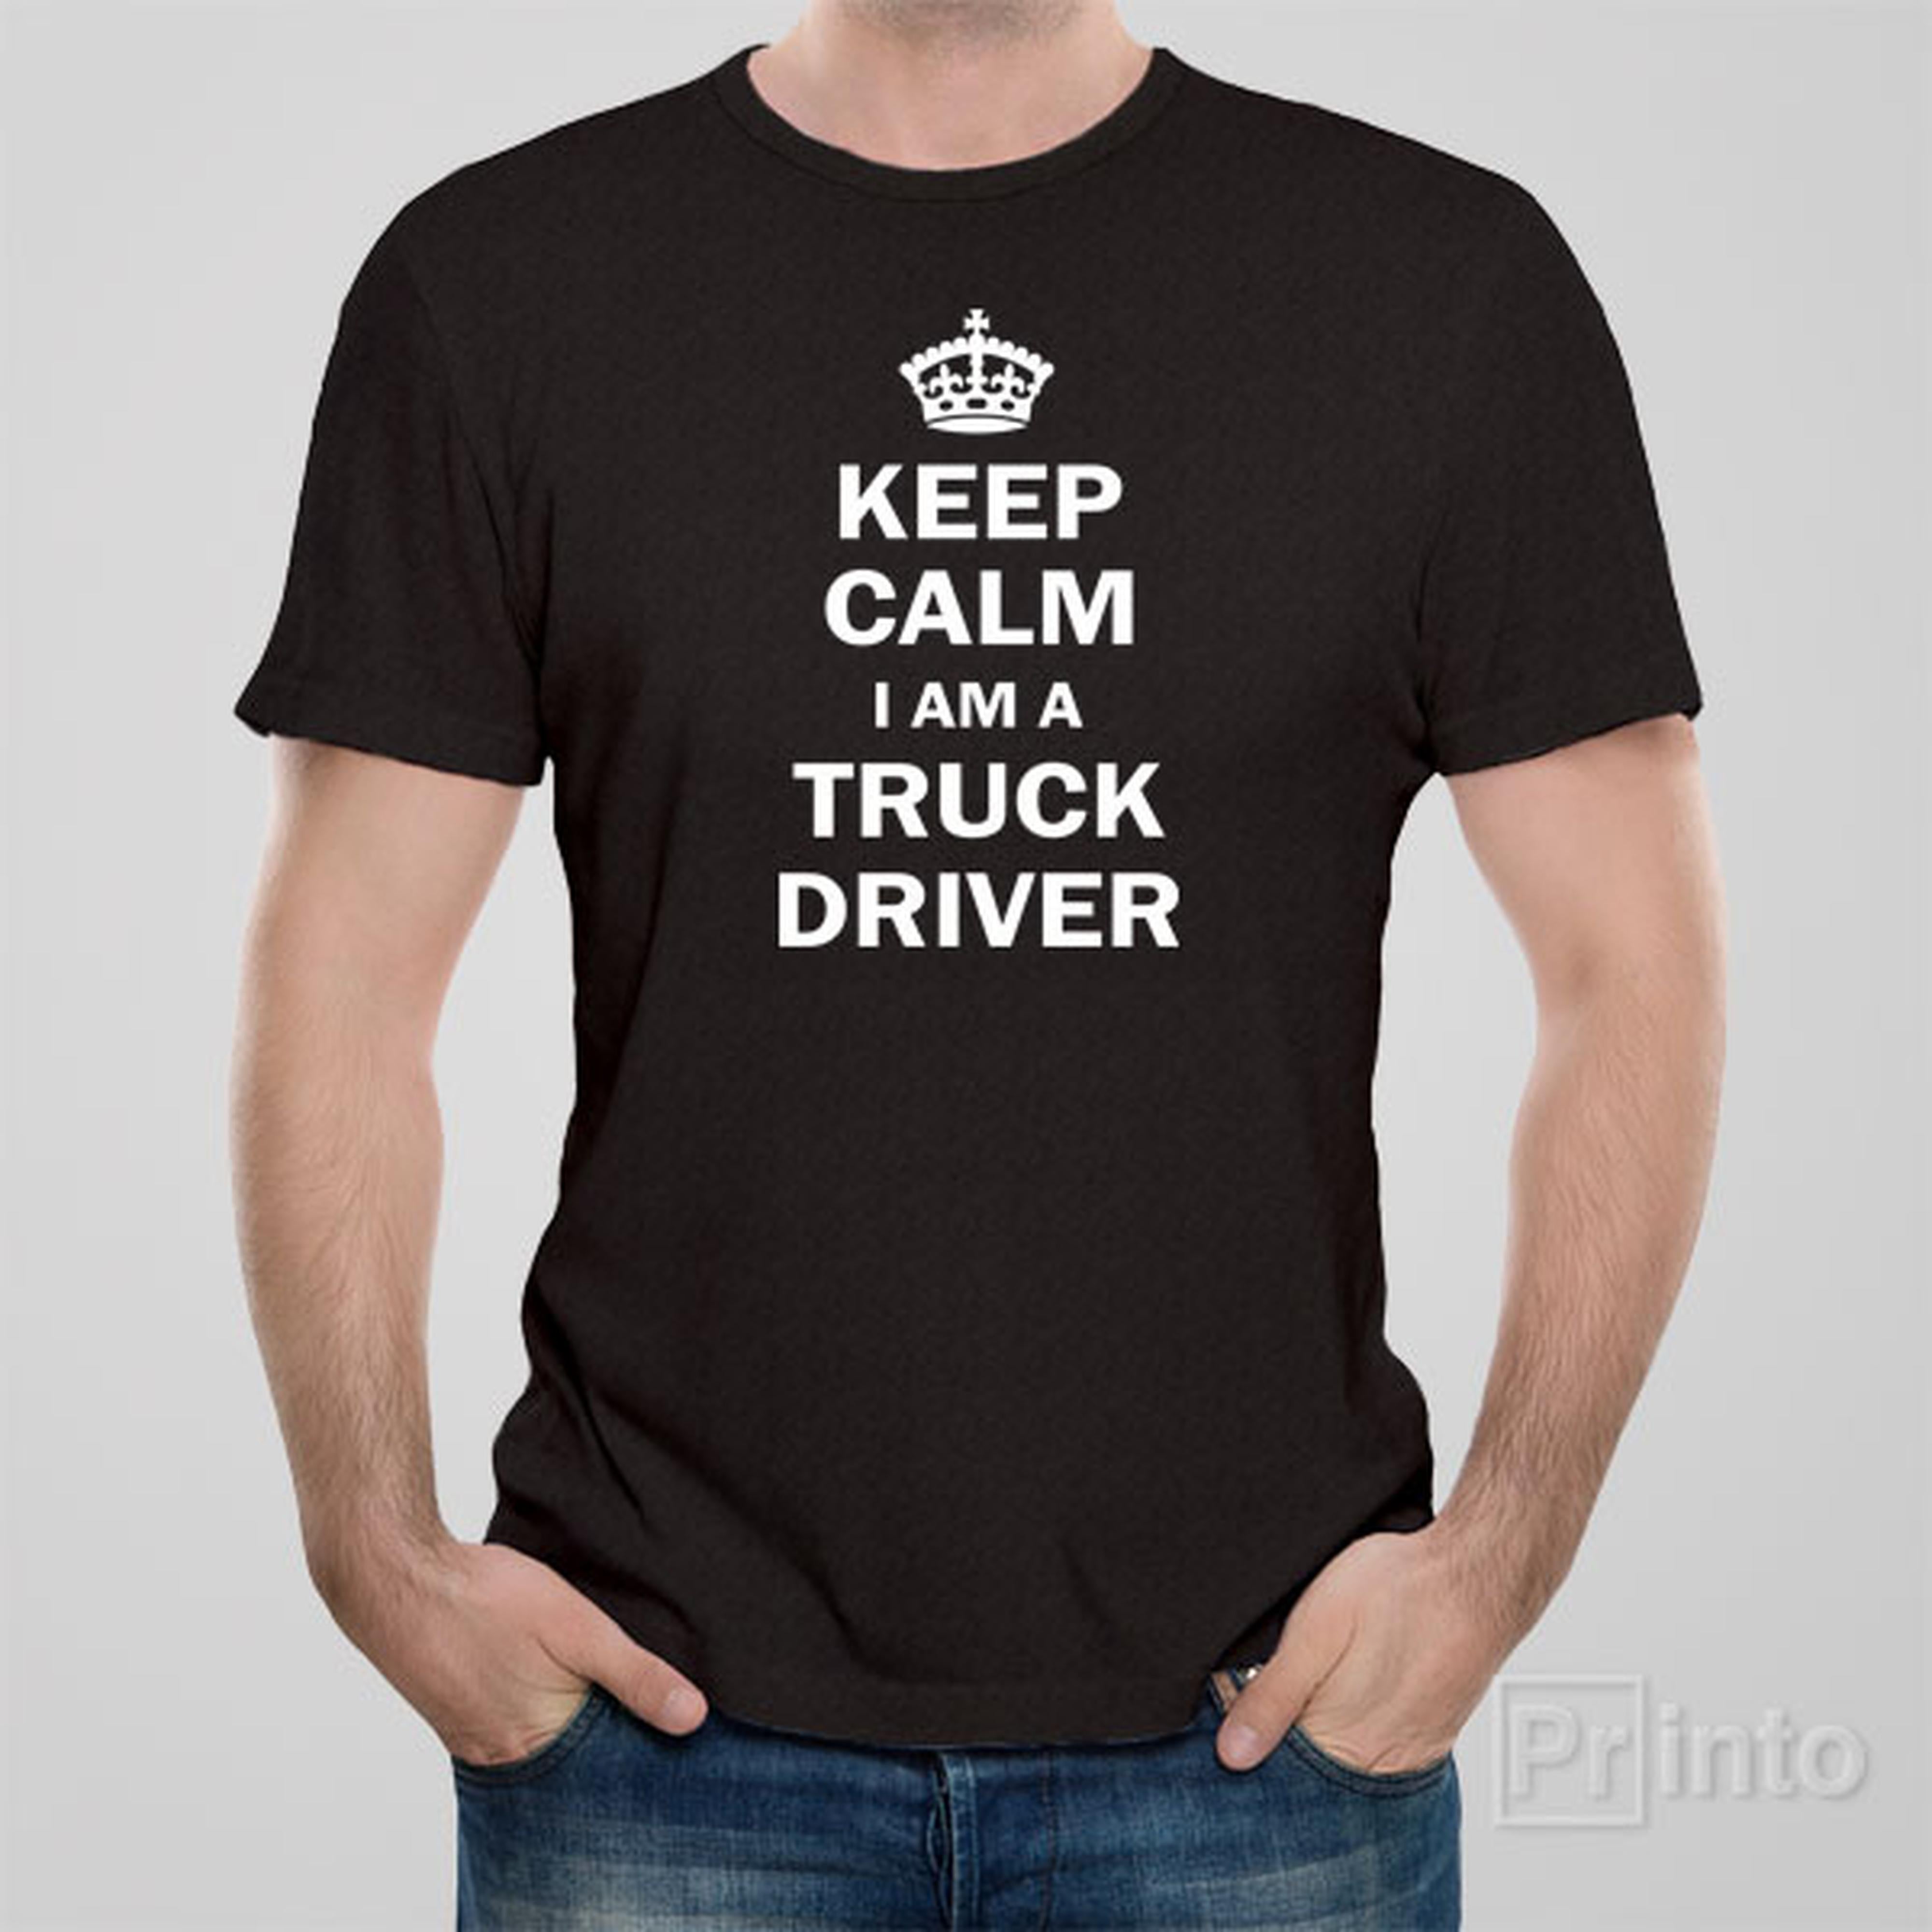 keep-calm-i-am-a-truck-driver-t-shirt